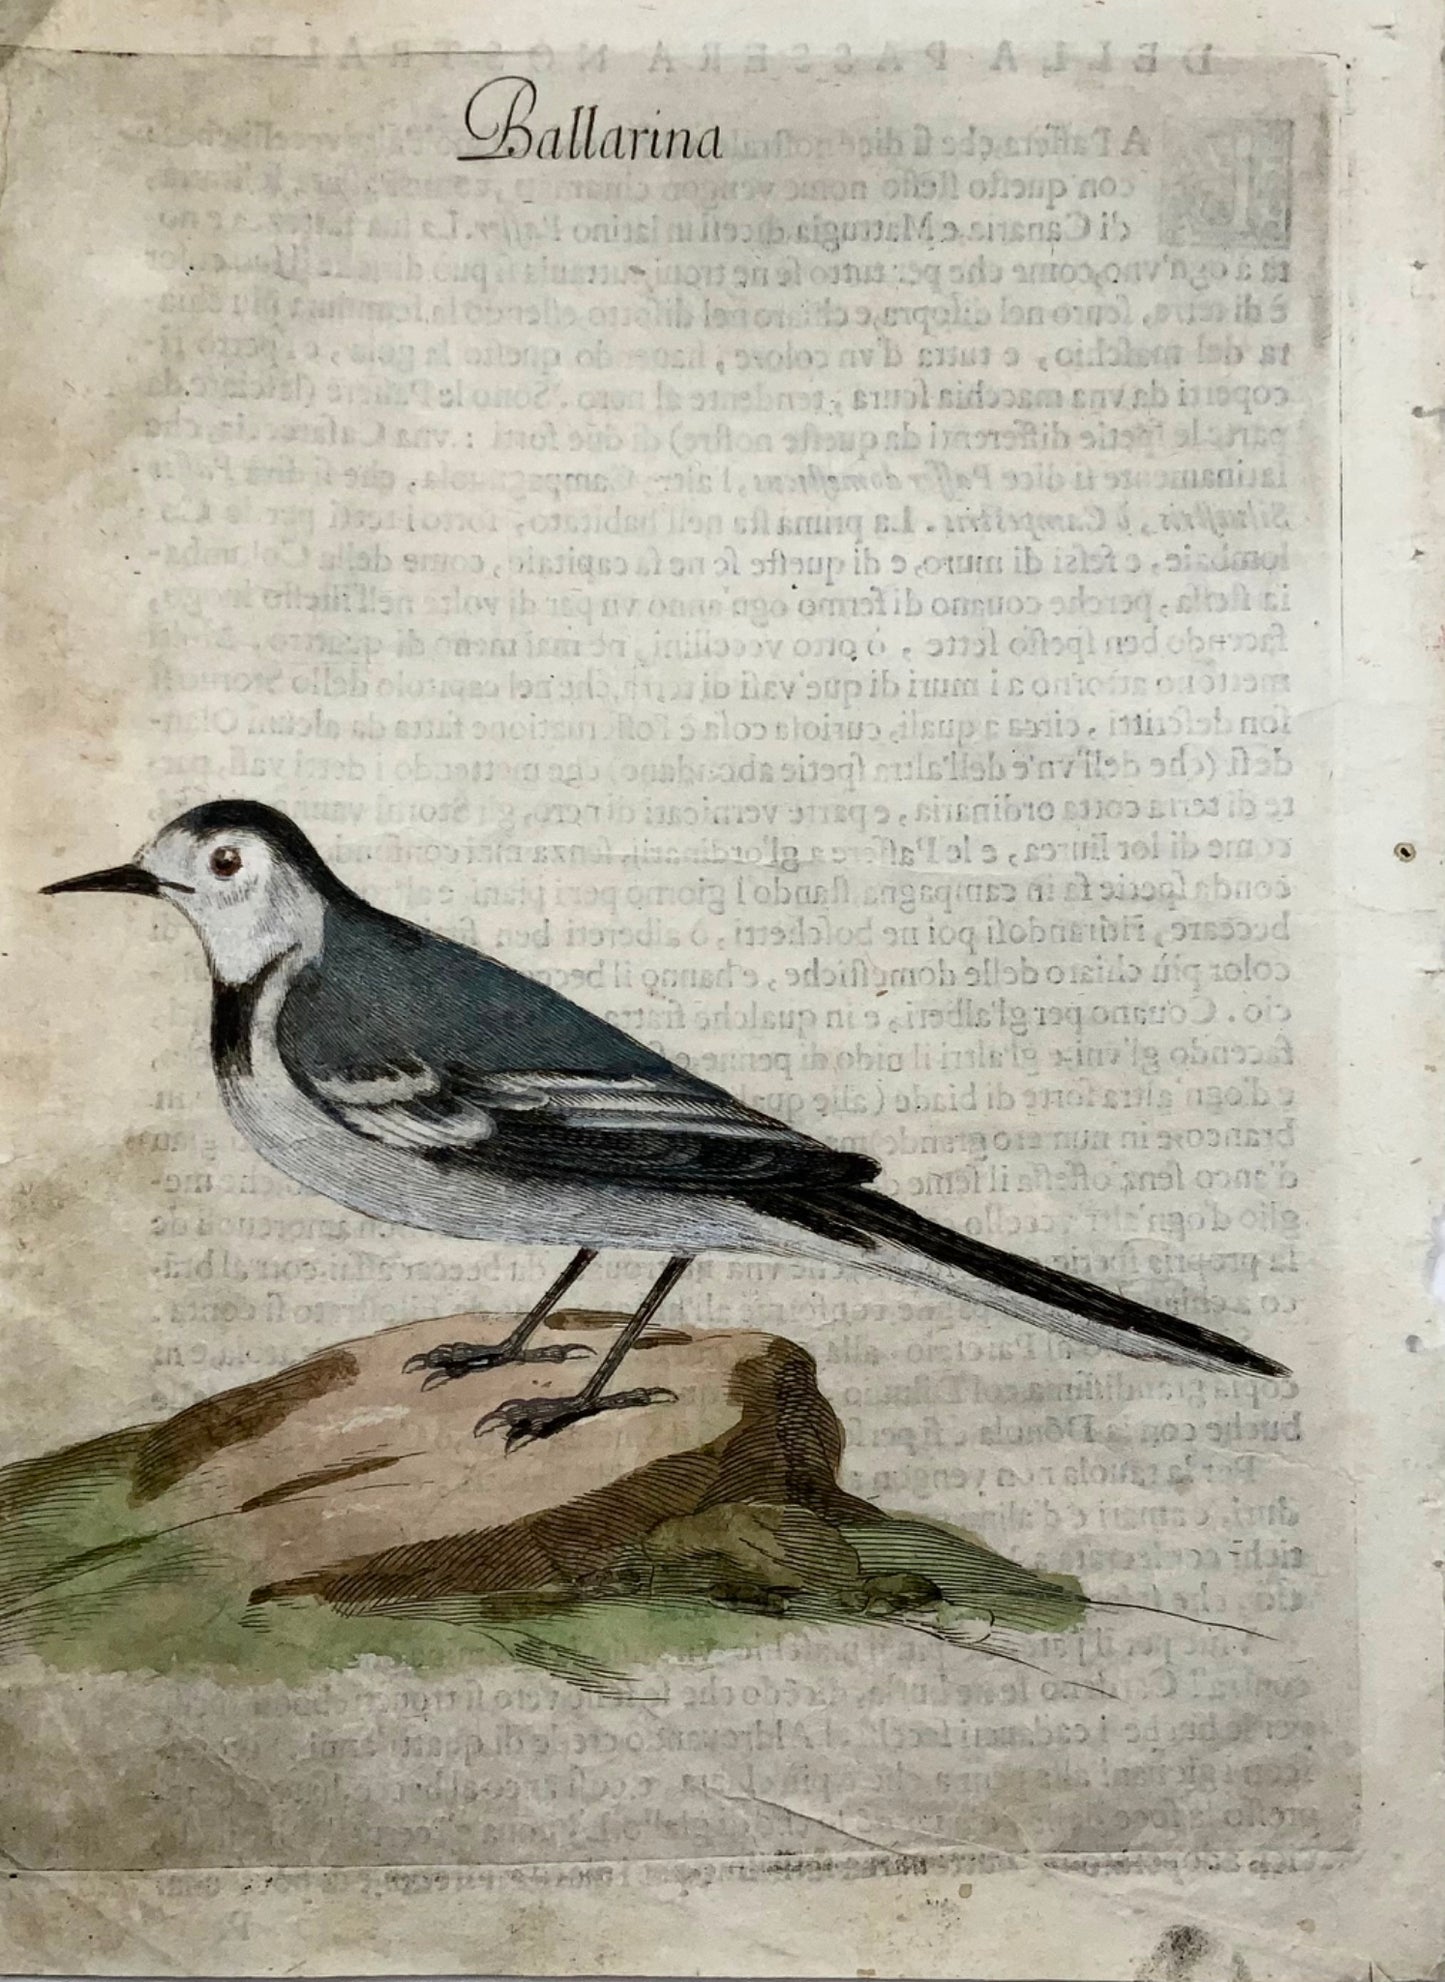 1622 Wagtail, Ornithology, Ant. Tempesta; F. Villamena, Master Engraving